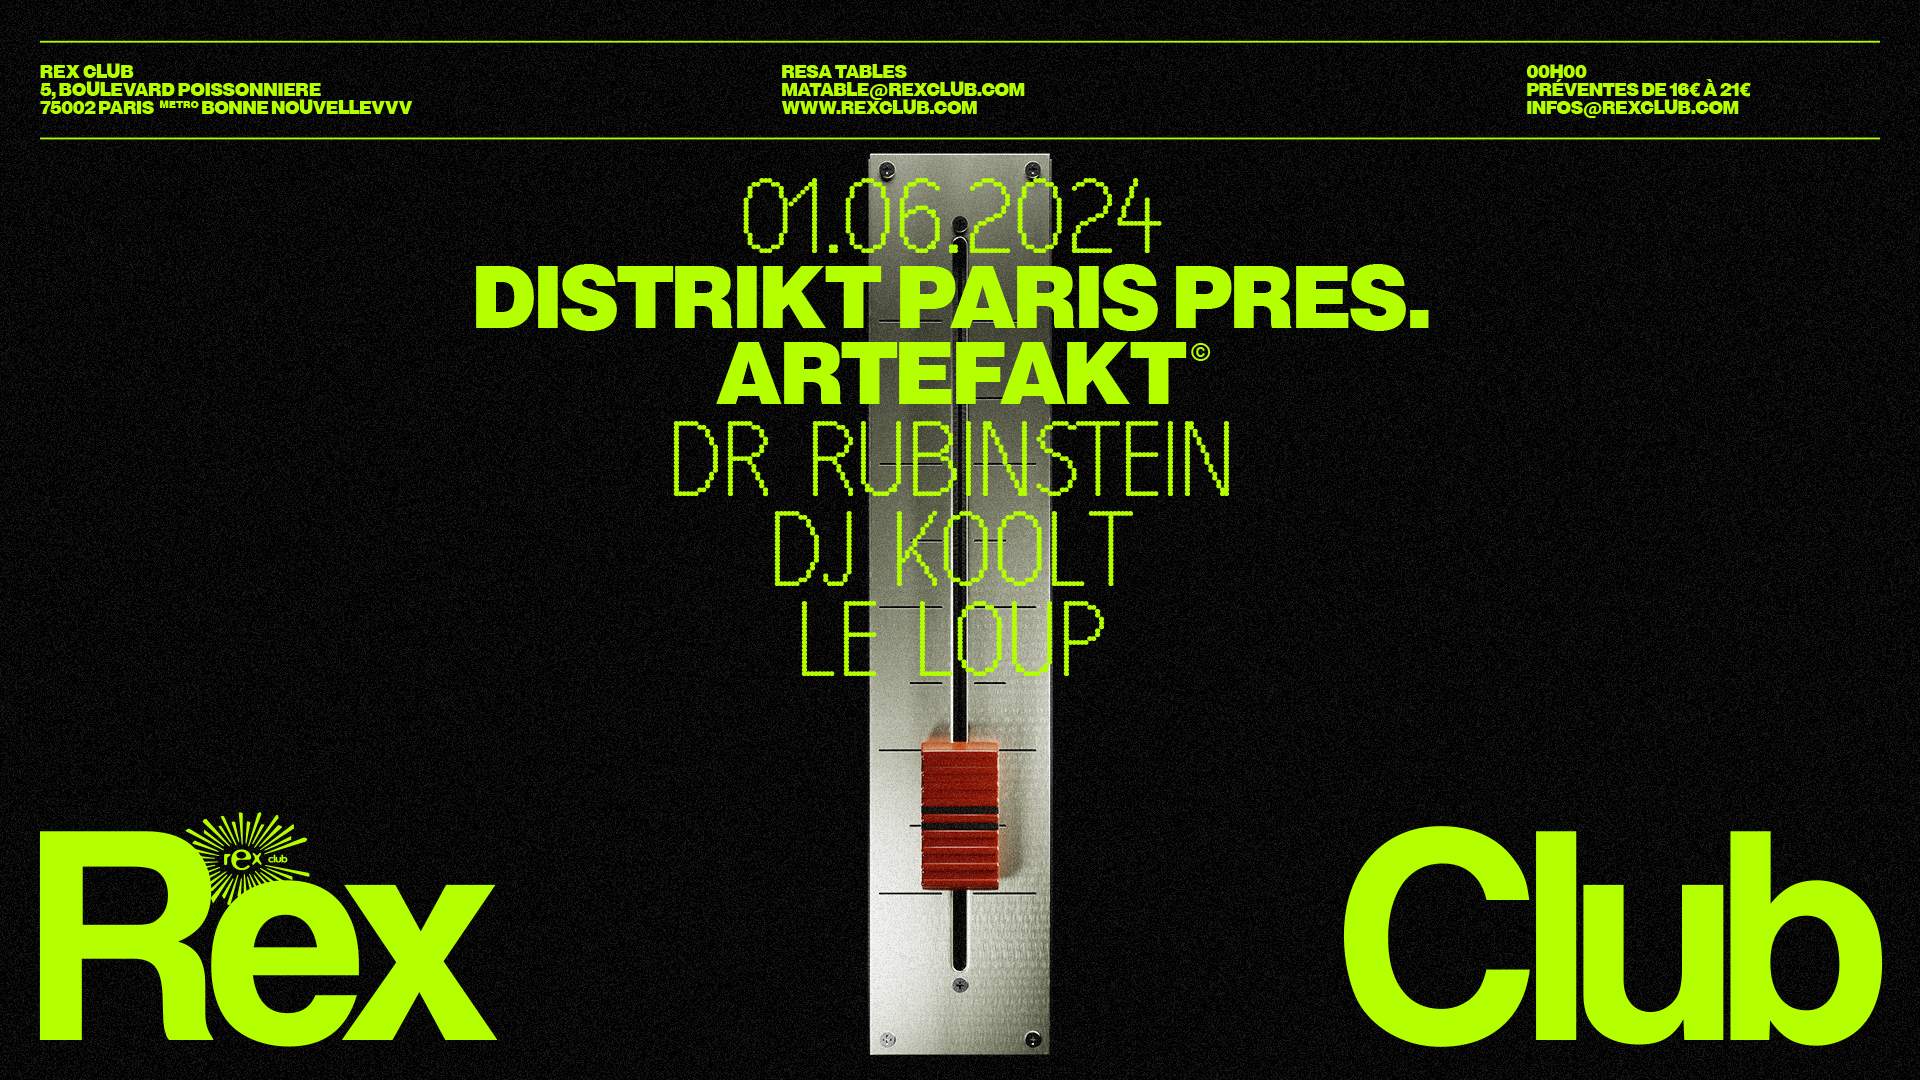 Distrikt Paris presents Artefakt: Dr Rubinstein, DJ Koolt, Le Loup - Página frontal